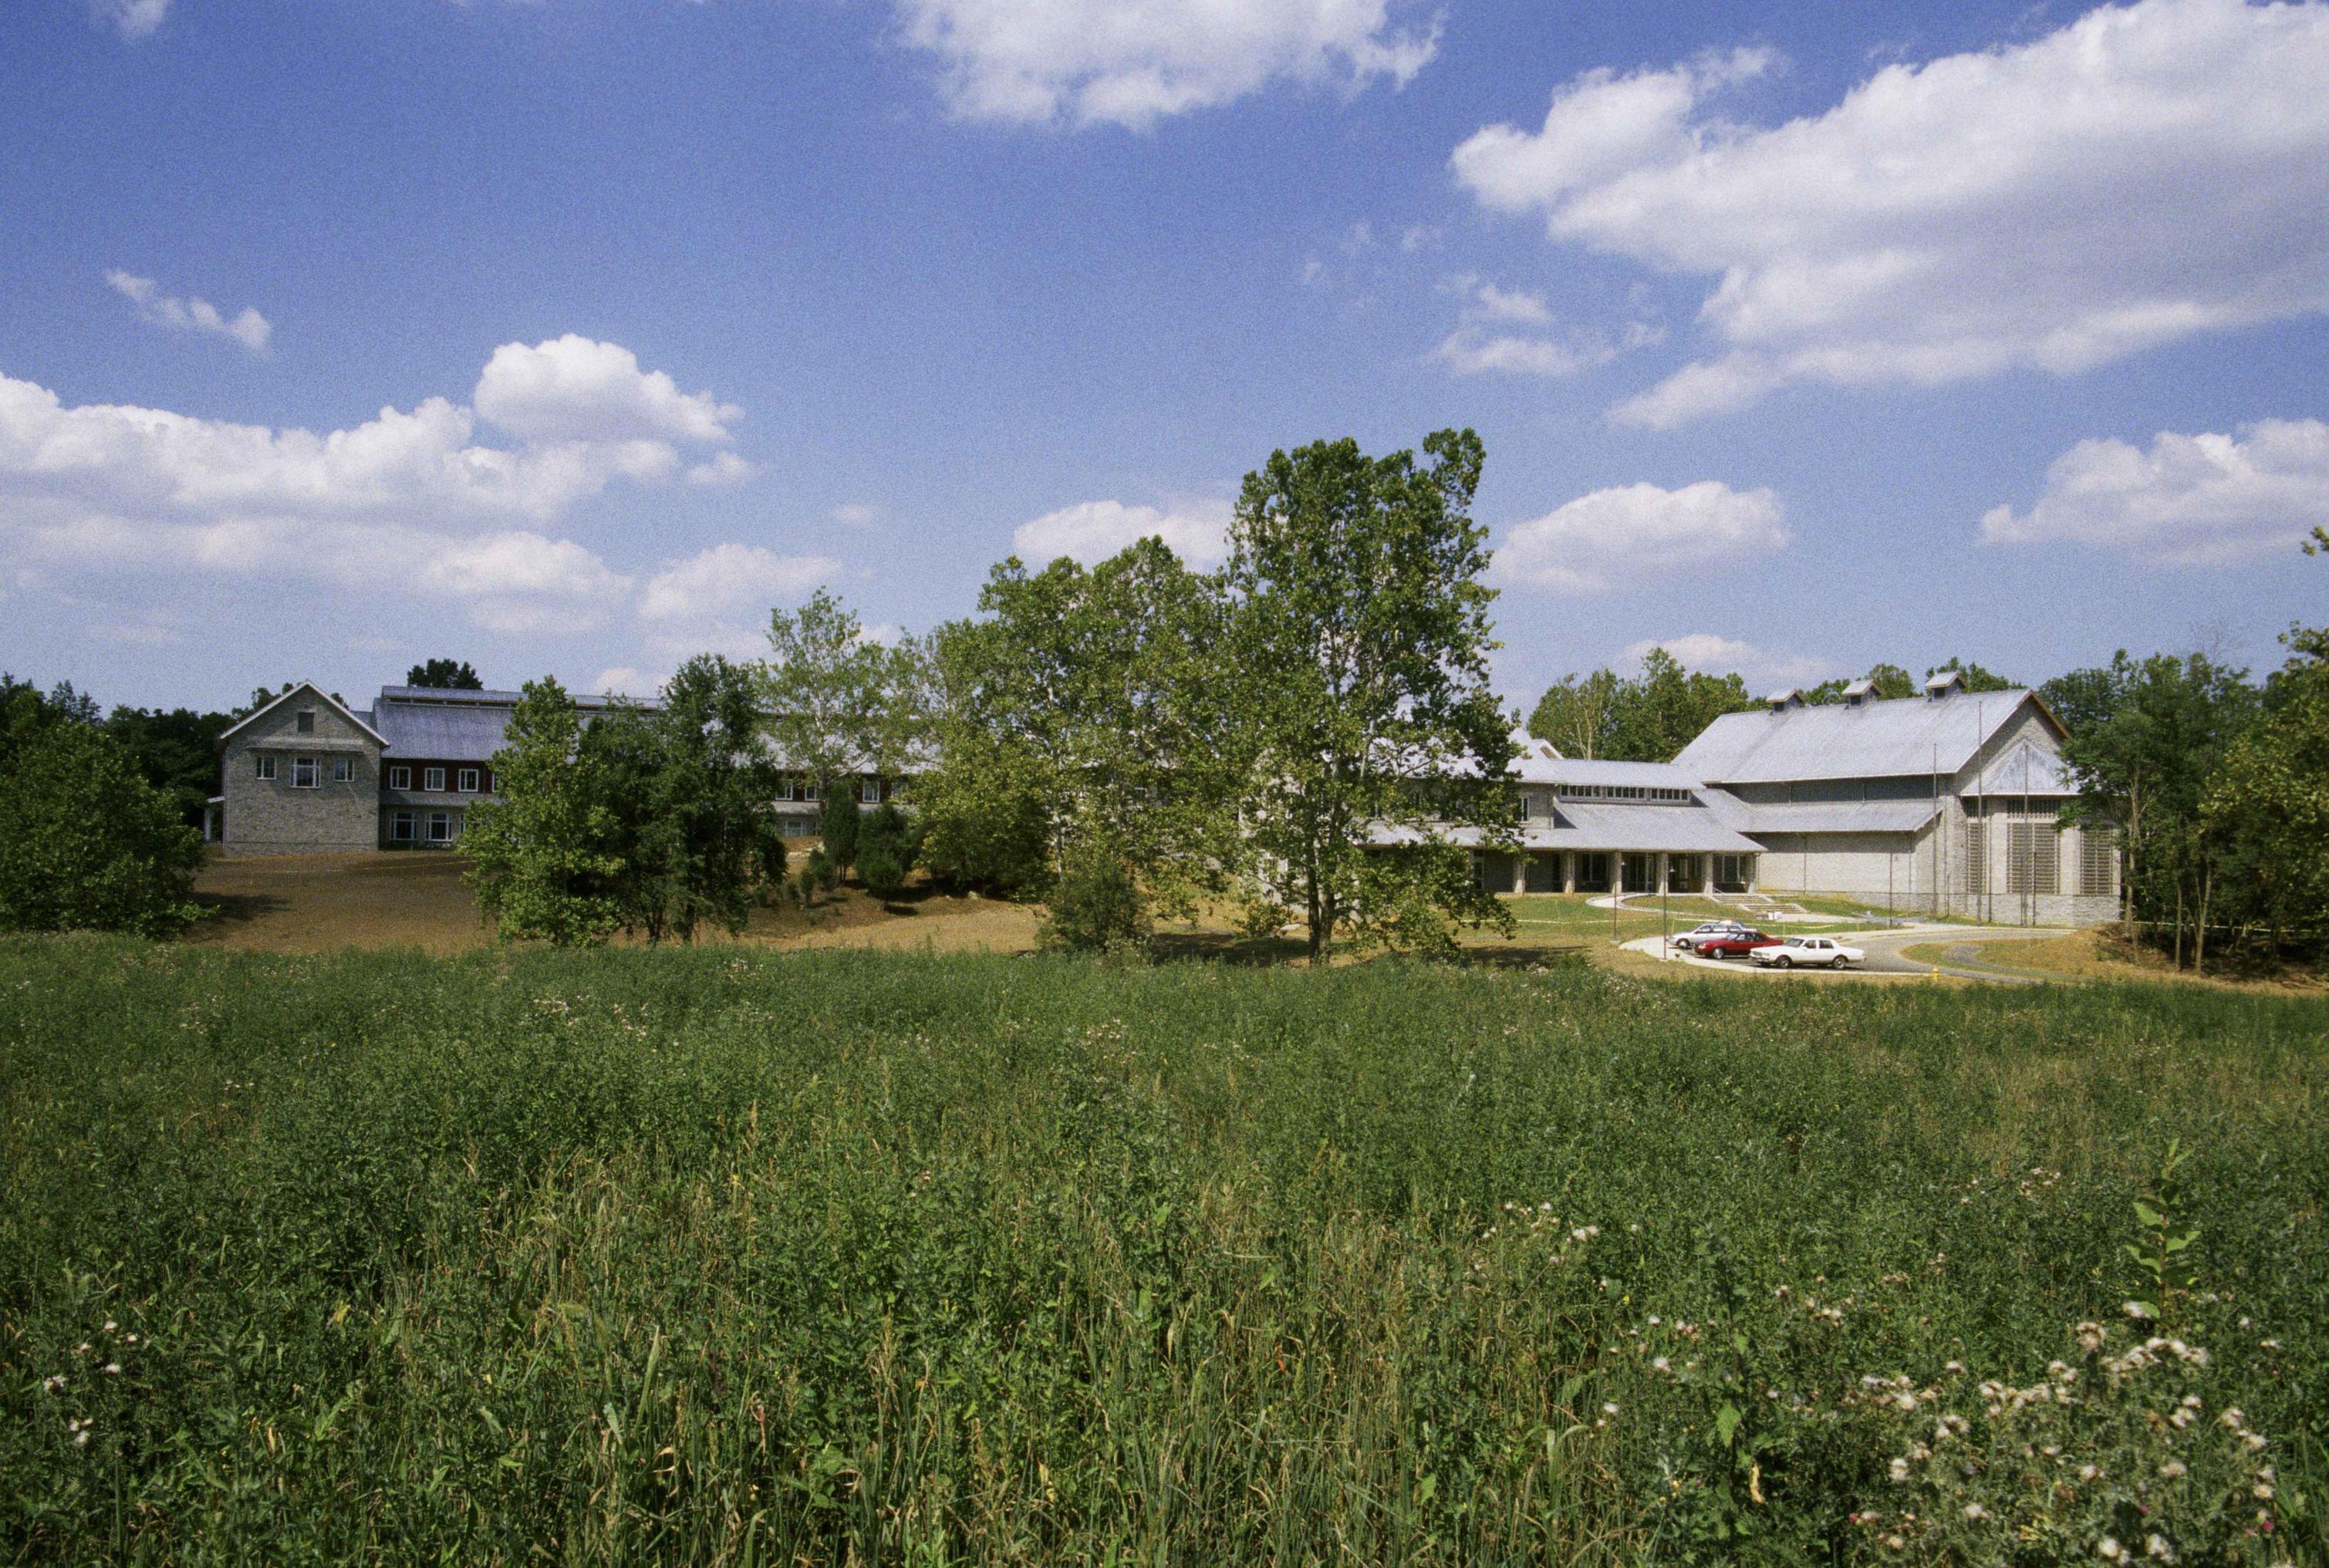 File:Building from across green grass field.jpg - Wikimedia Commons